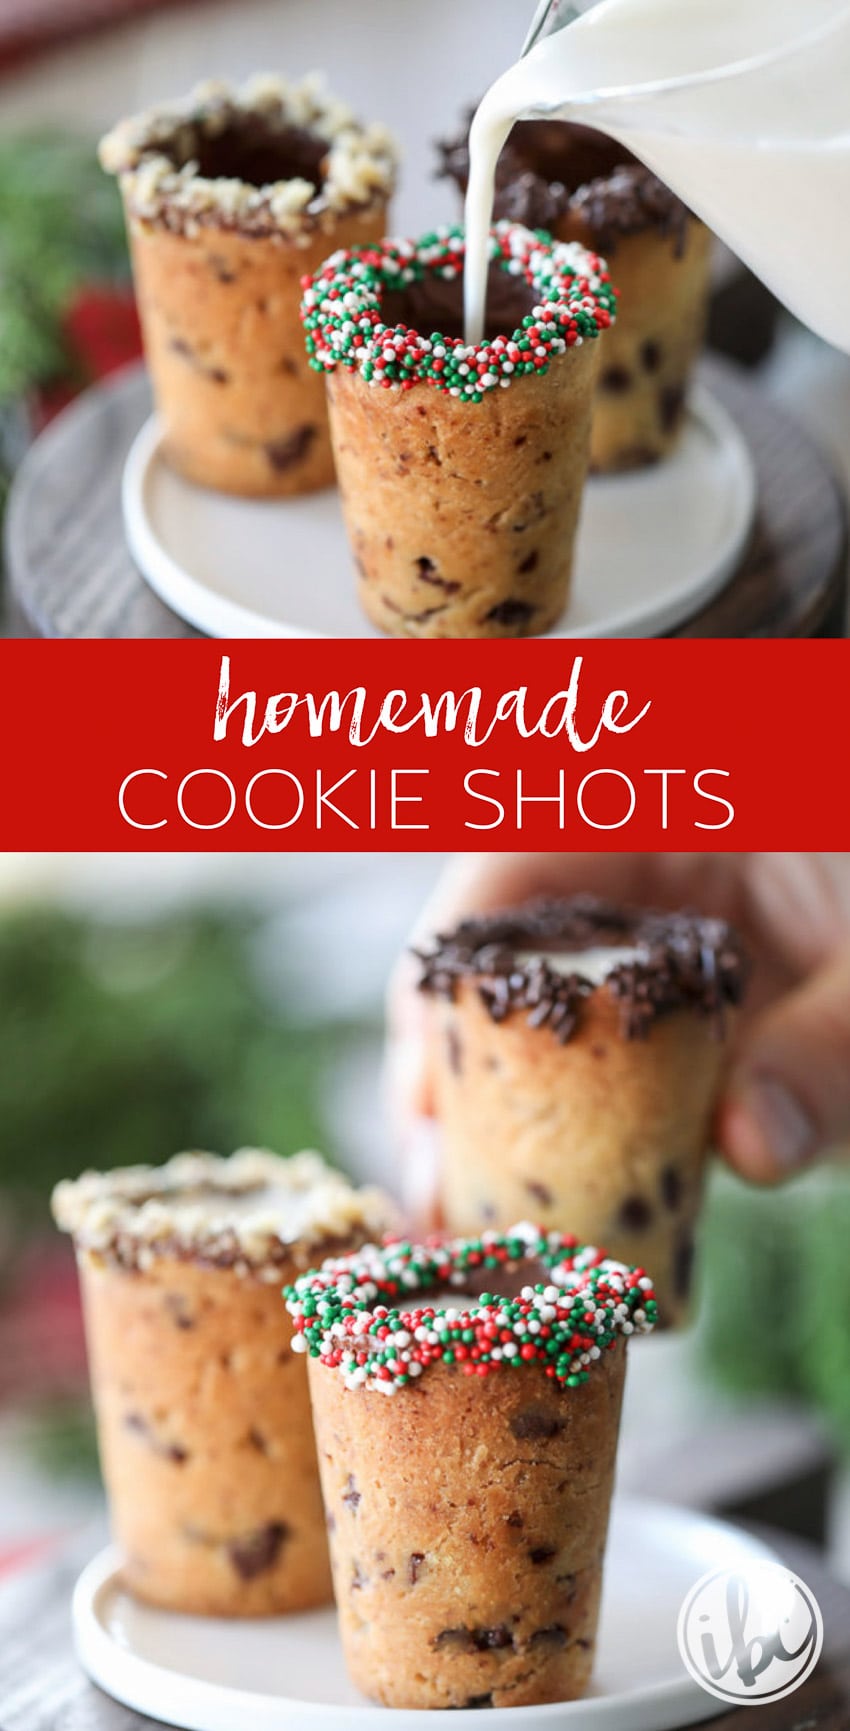 Homemade Milk and Cookie Shots make a unique and delicious dessert. #cookie #cookieshot #milk #dessert #recipe #cookieshotglass #chocolatechip